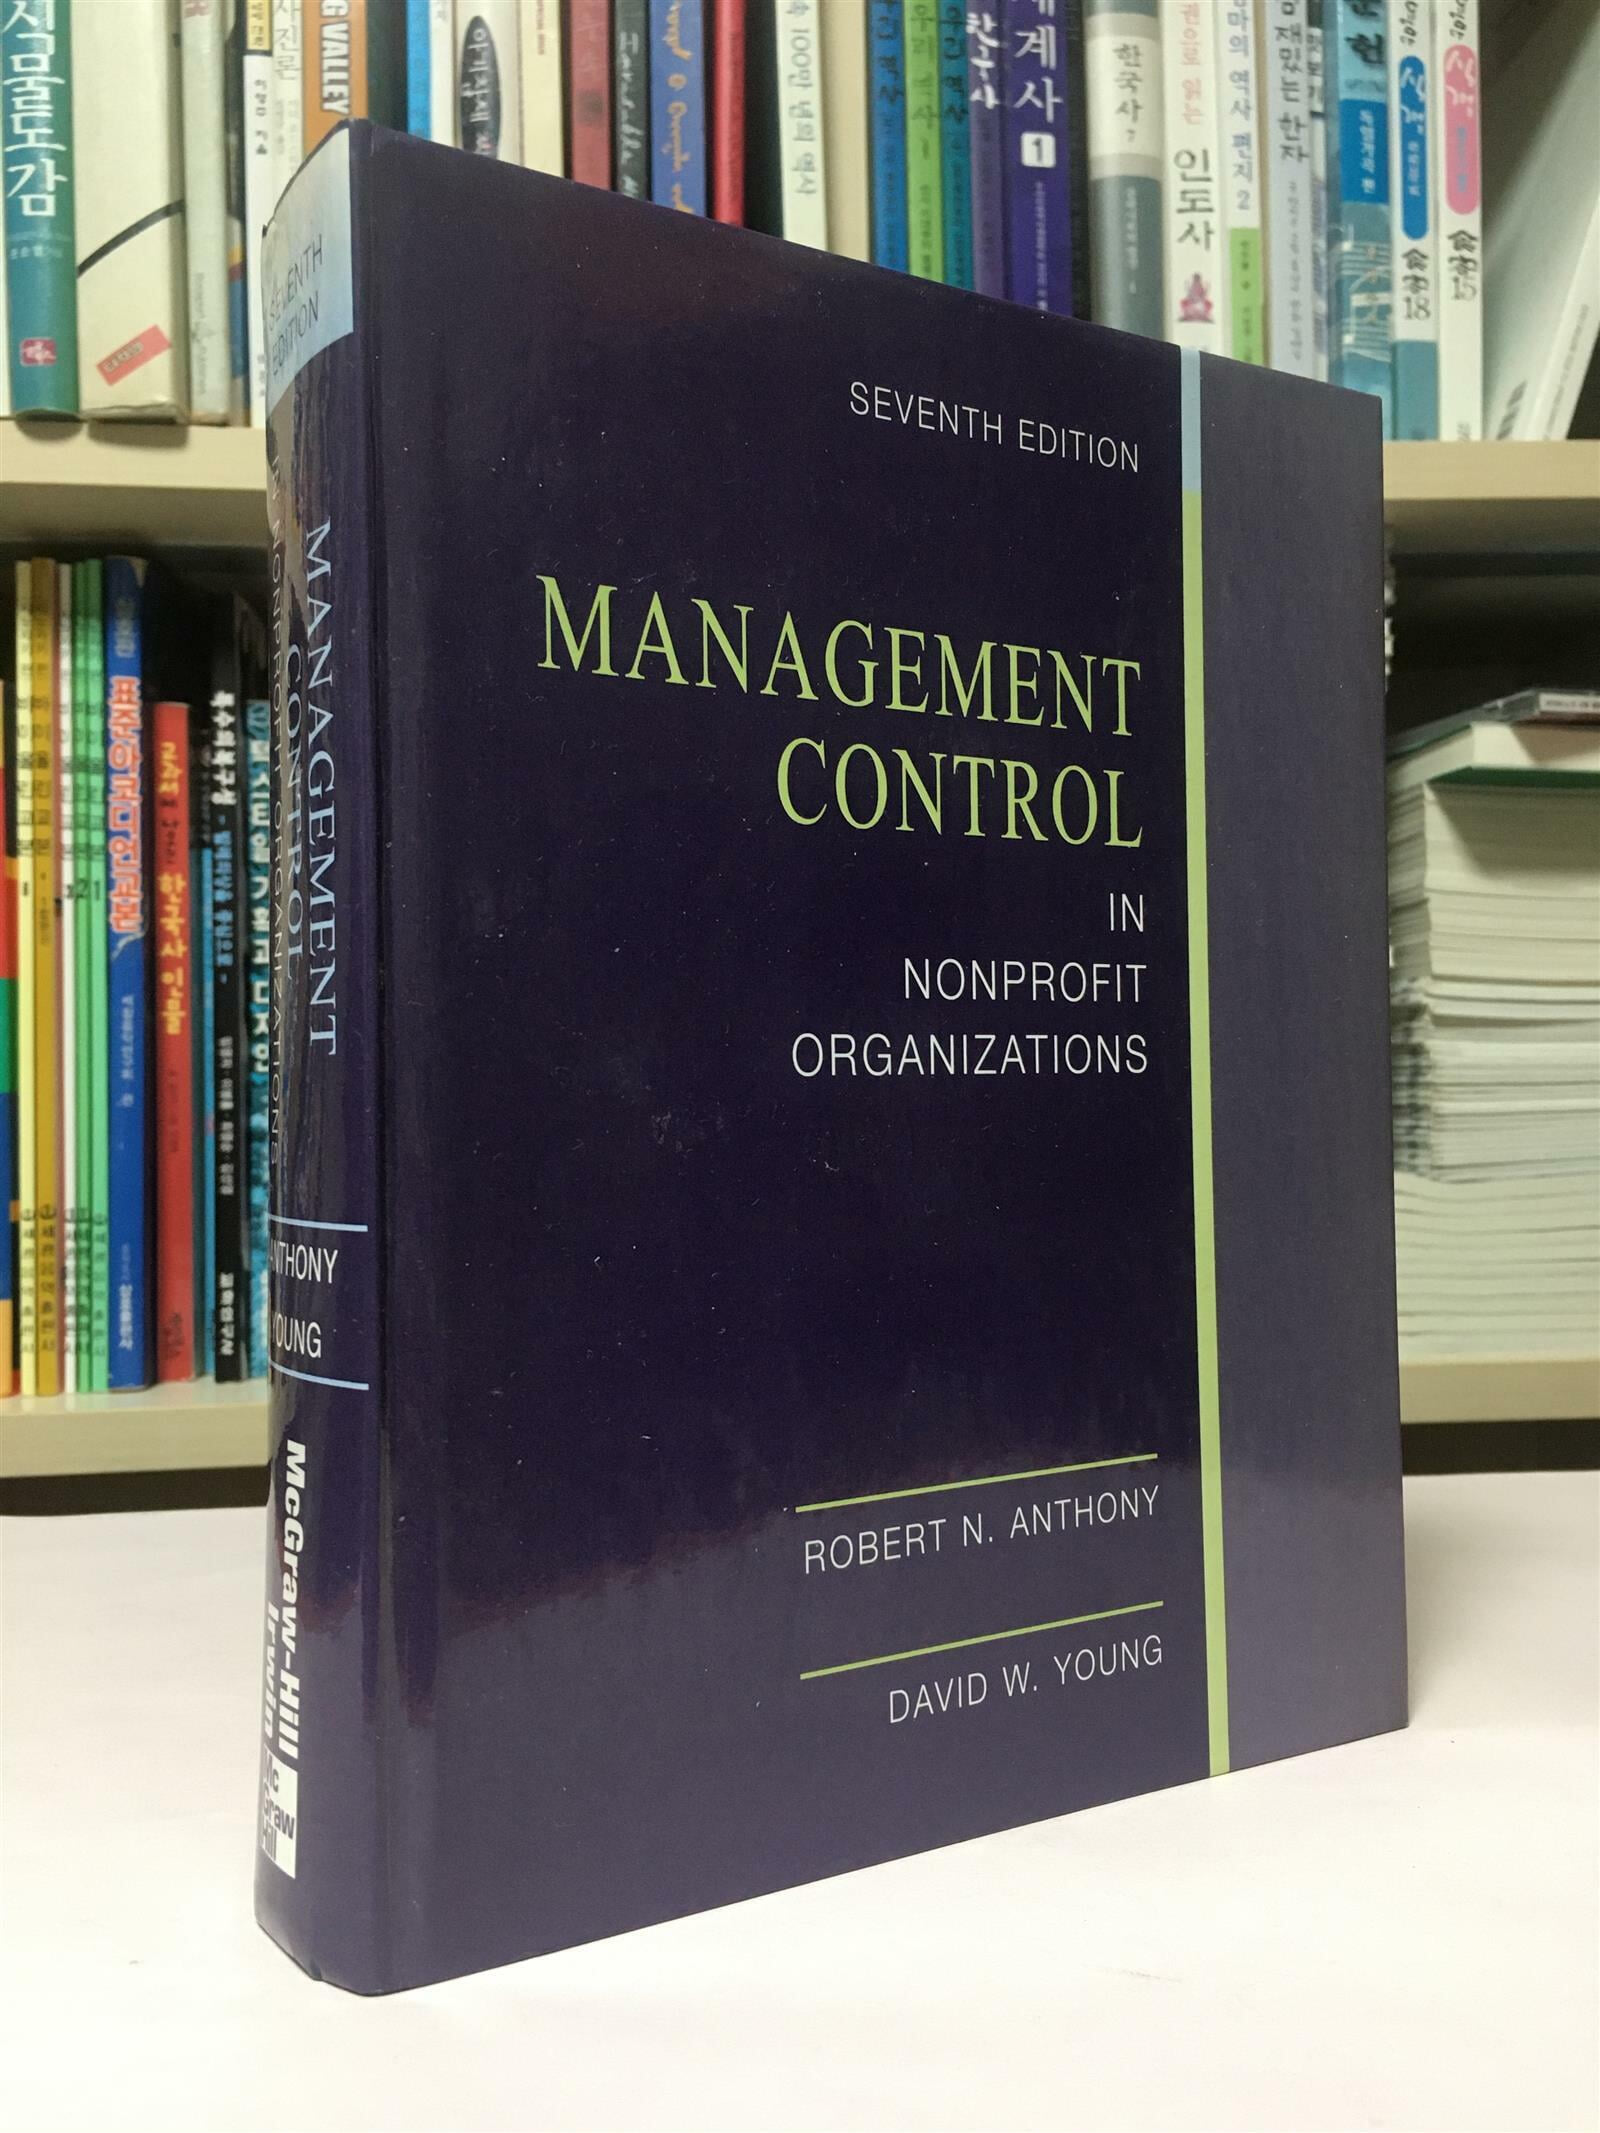 Management Control in Nonprofit Organizations